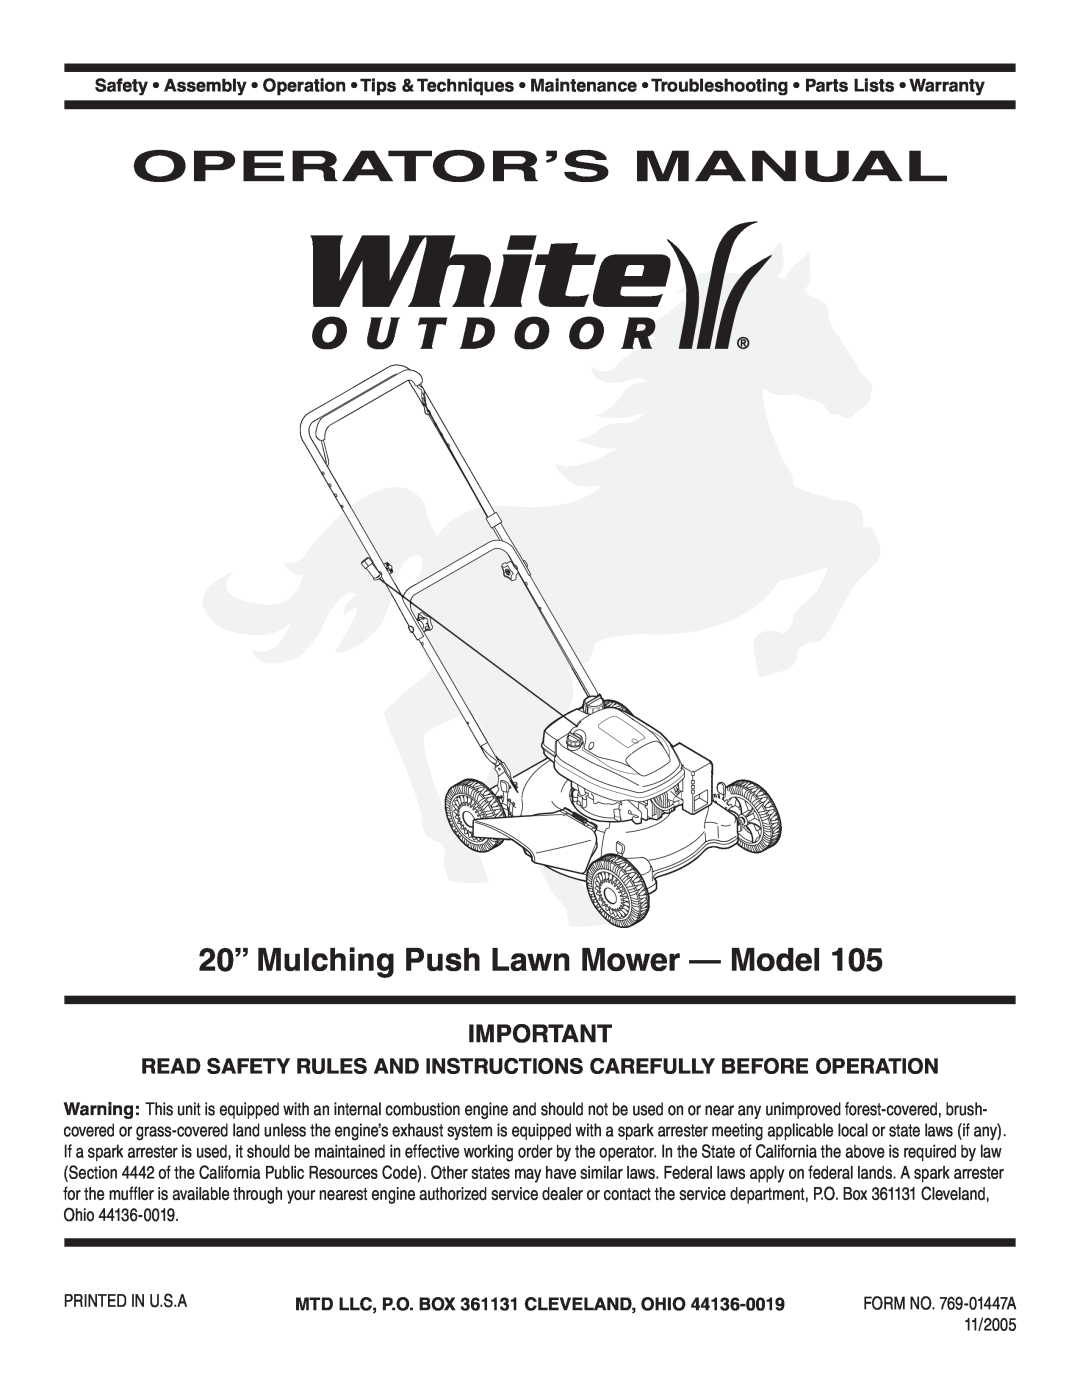 Tecumseh 105 warranty Operator’S Manual, 20” Mulching Push Lawn Mower - Model, MTD LLC, P.O. BOX 361131 CLEVELAND, OHIO 